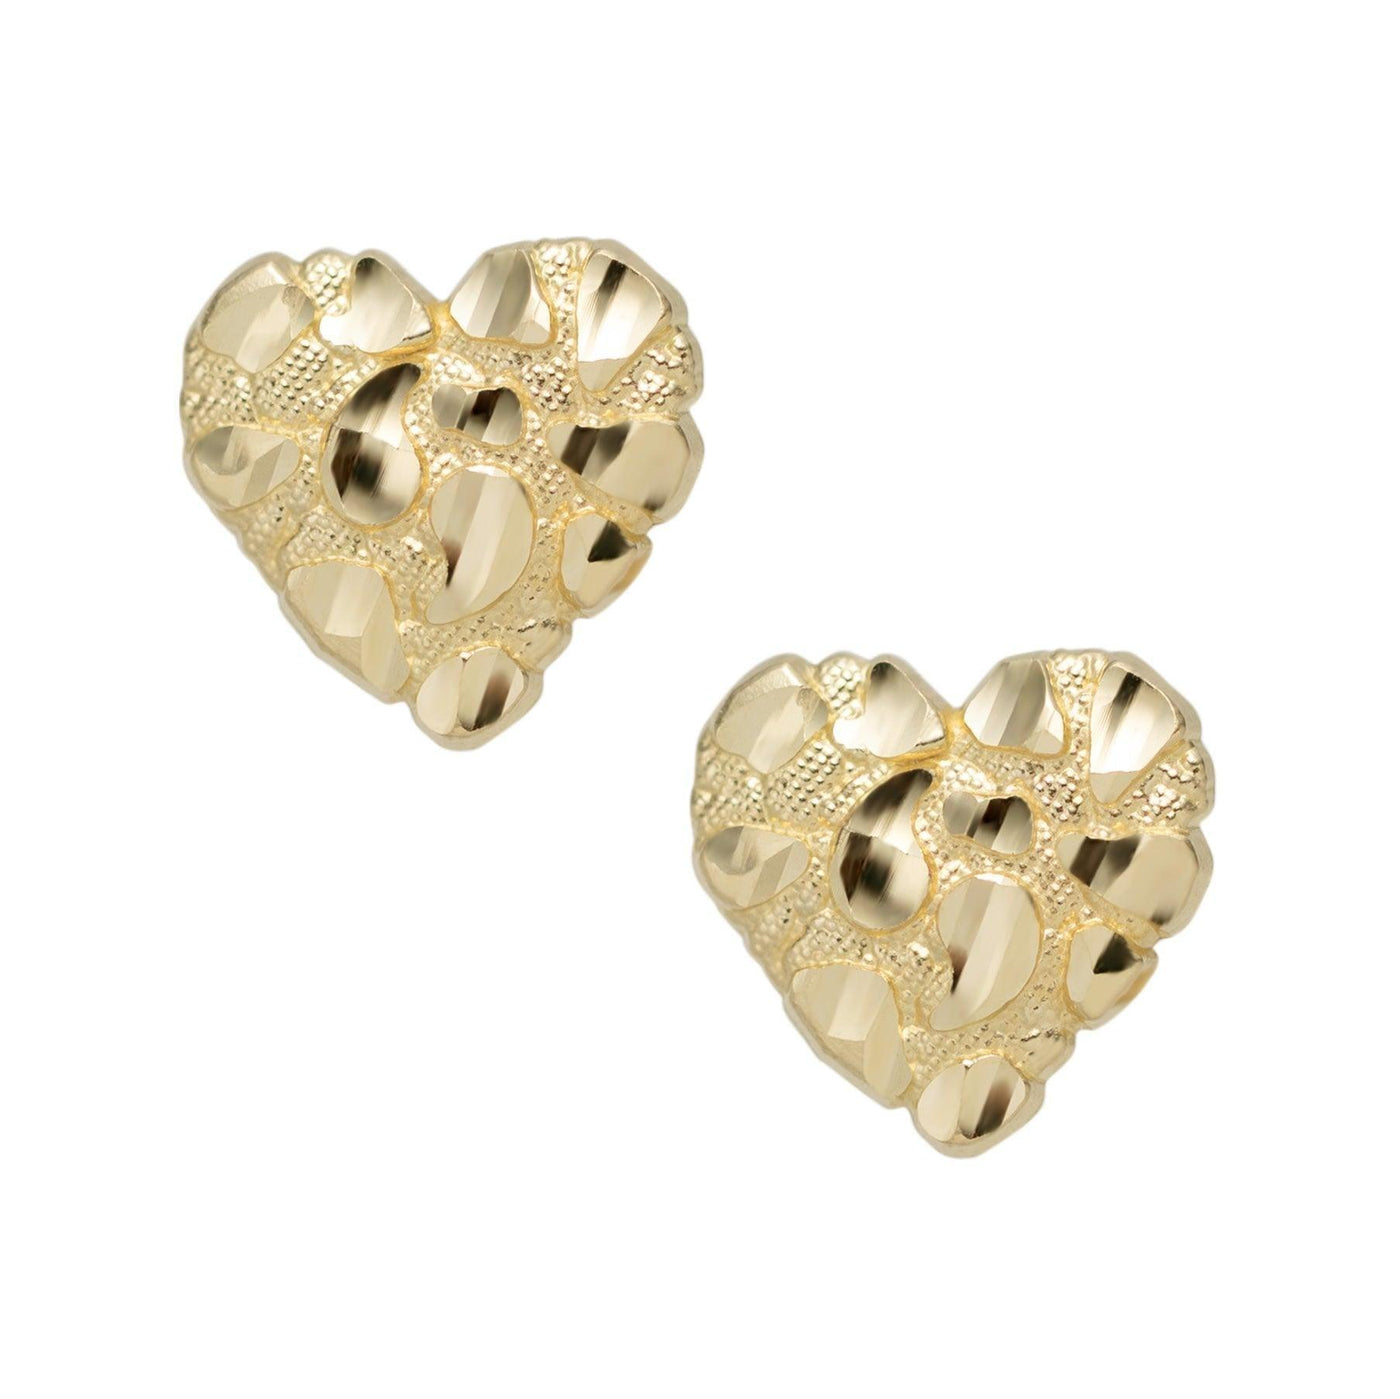 Small Heart Shape Nugget Stud Earrings Solid 10K Yellow Gold - bayamjewelry